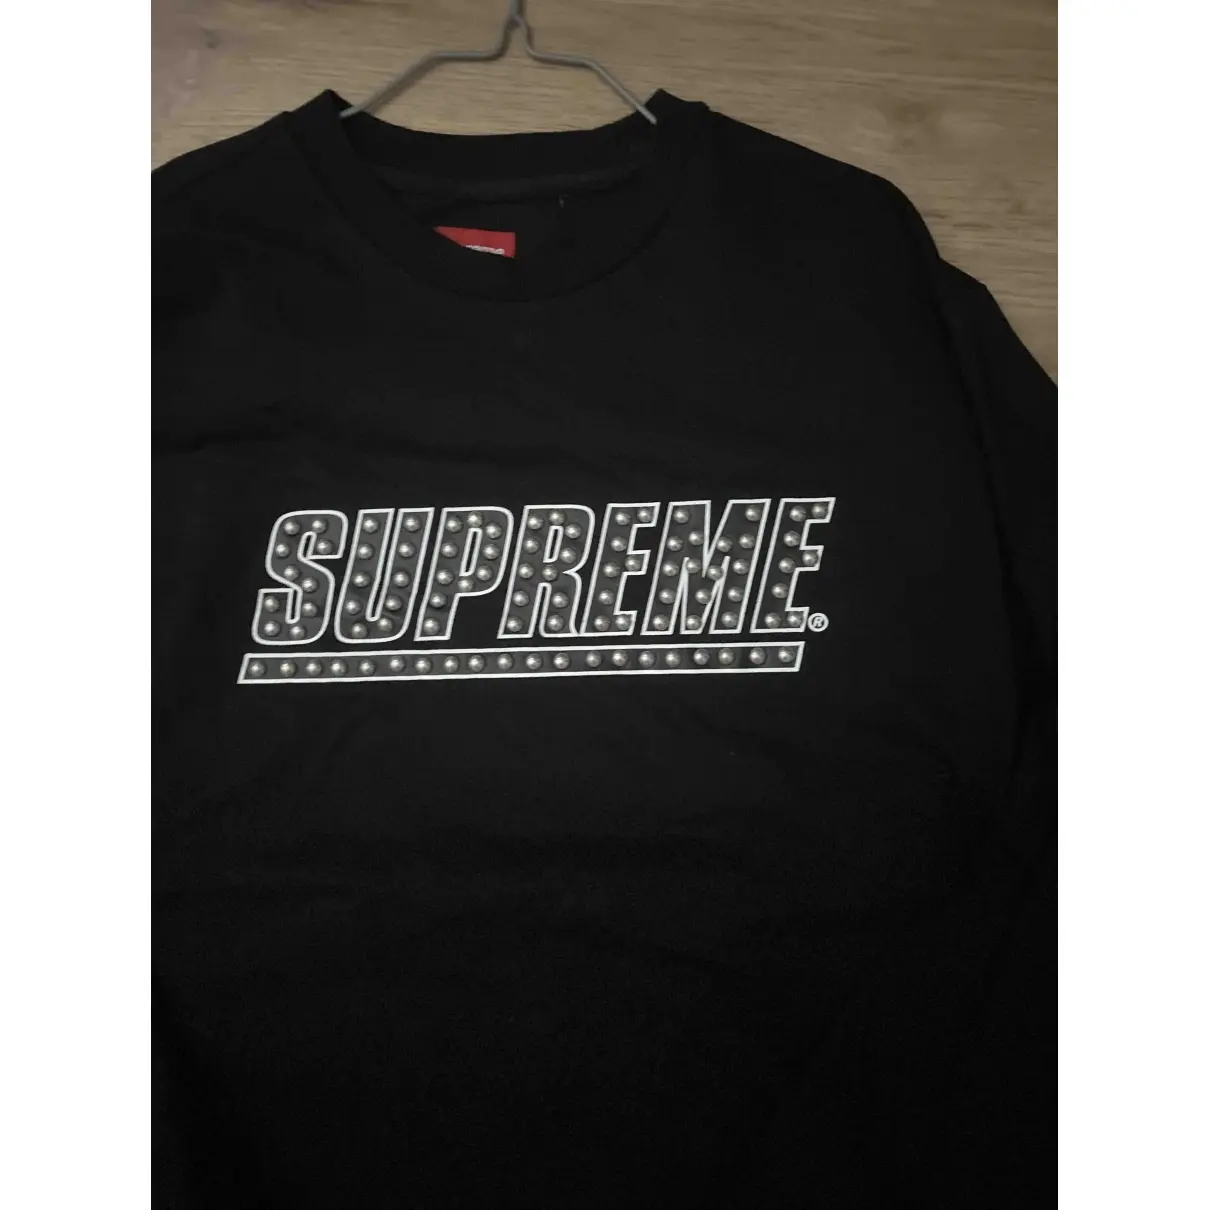 Supreme T-shirt for sale